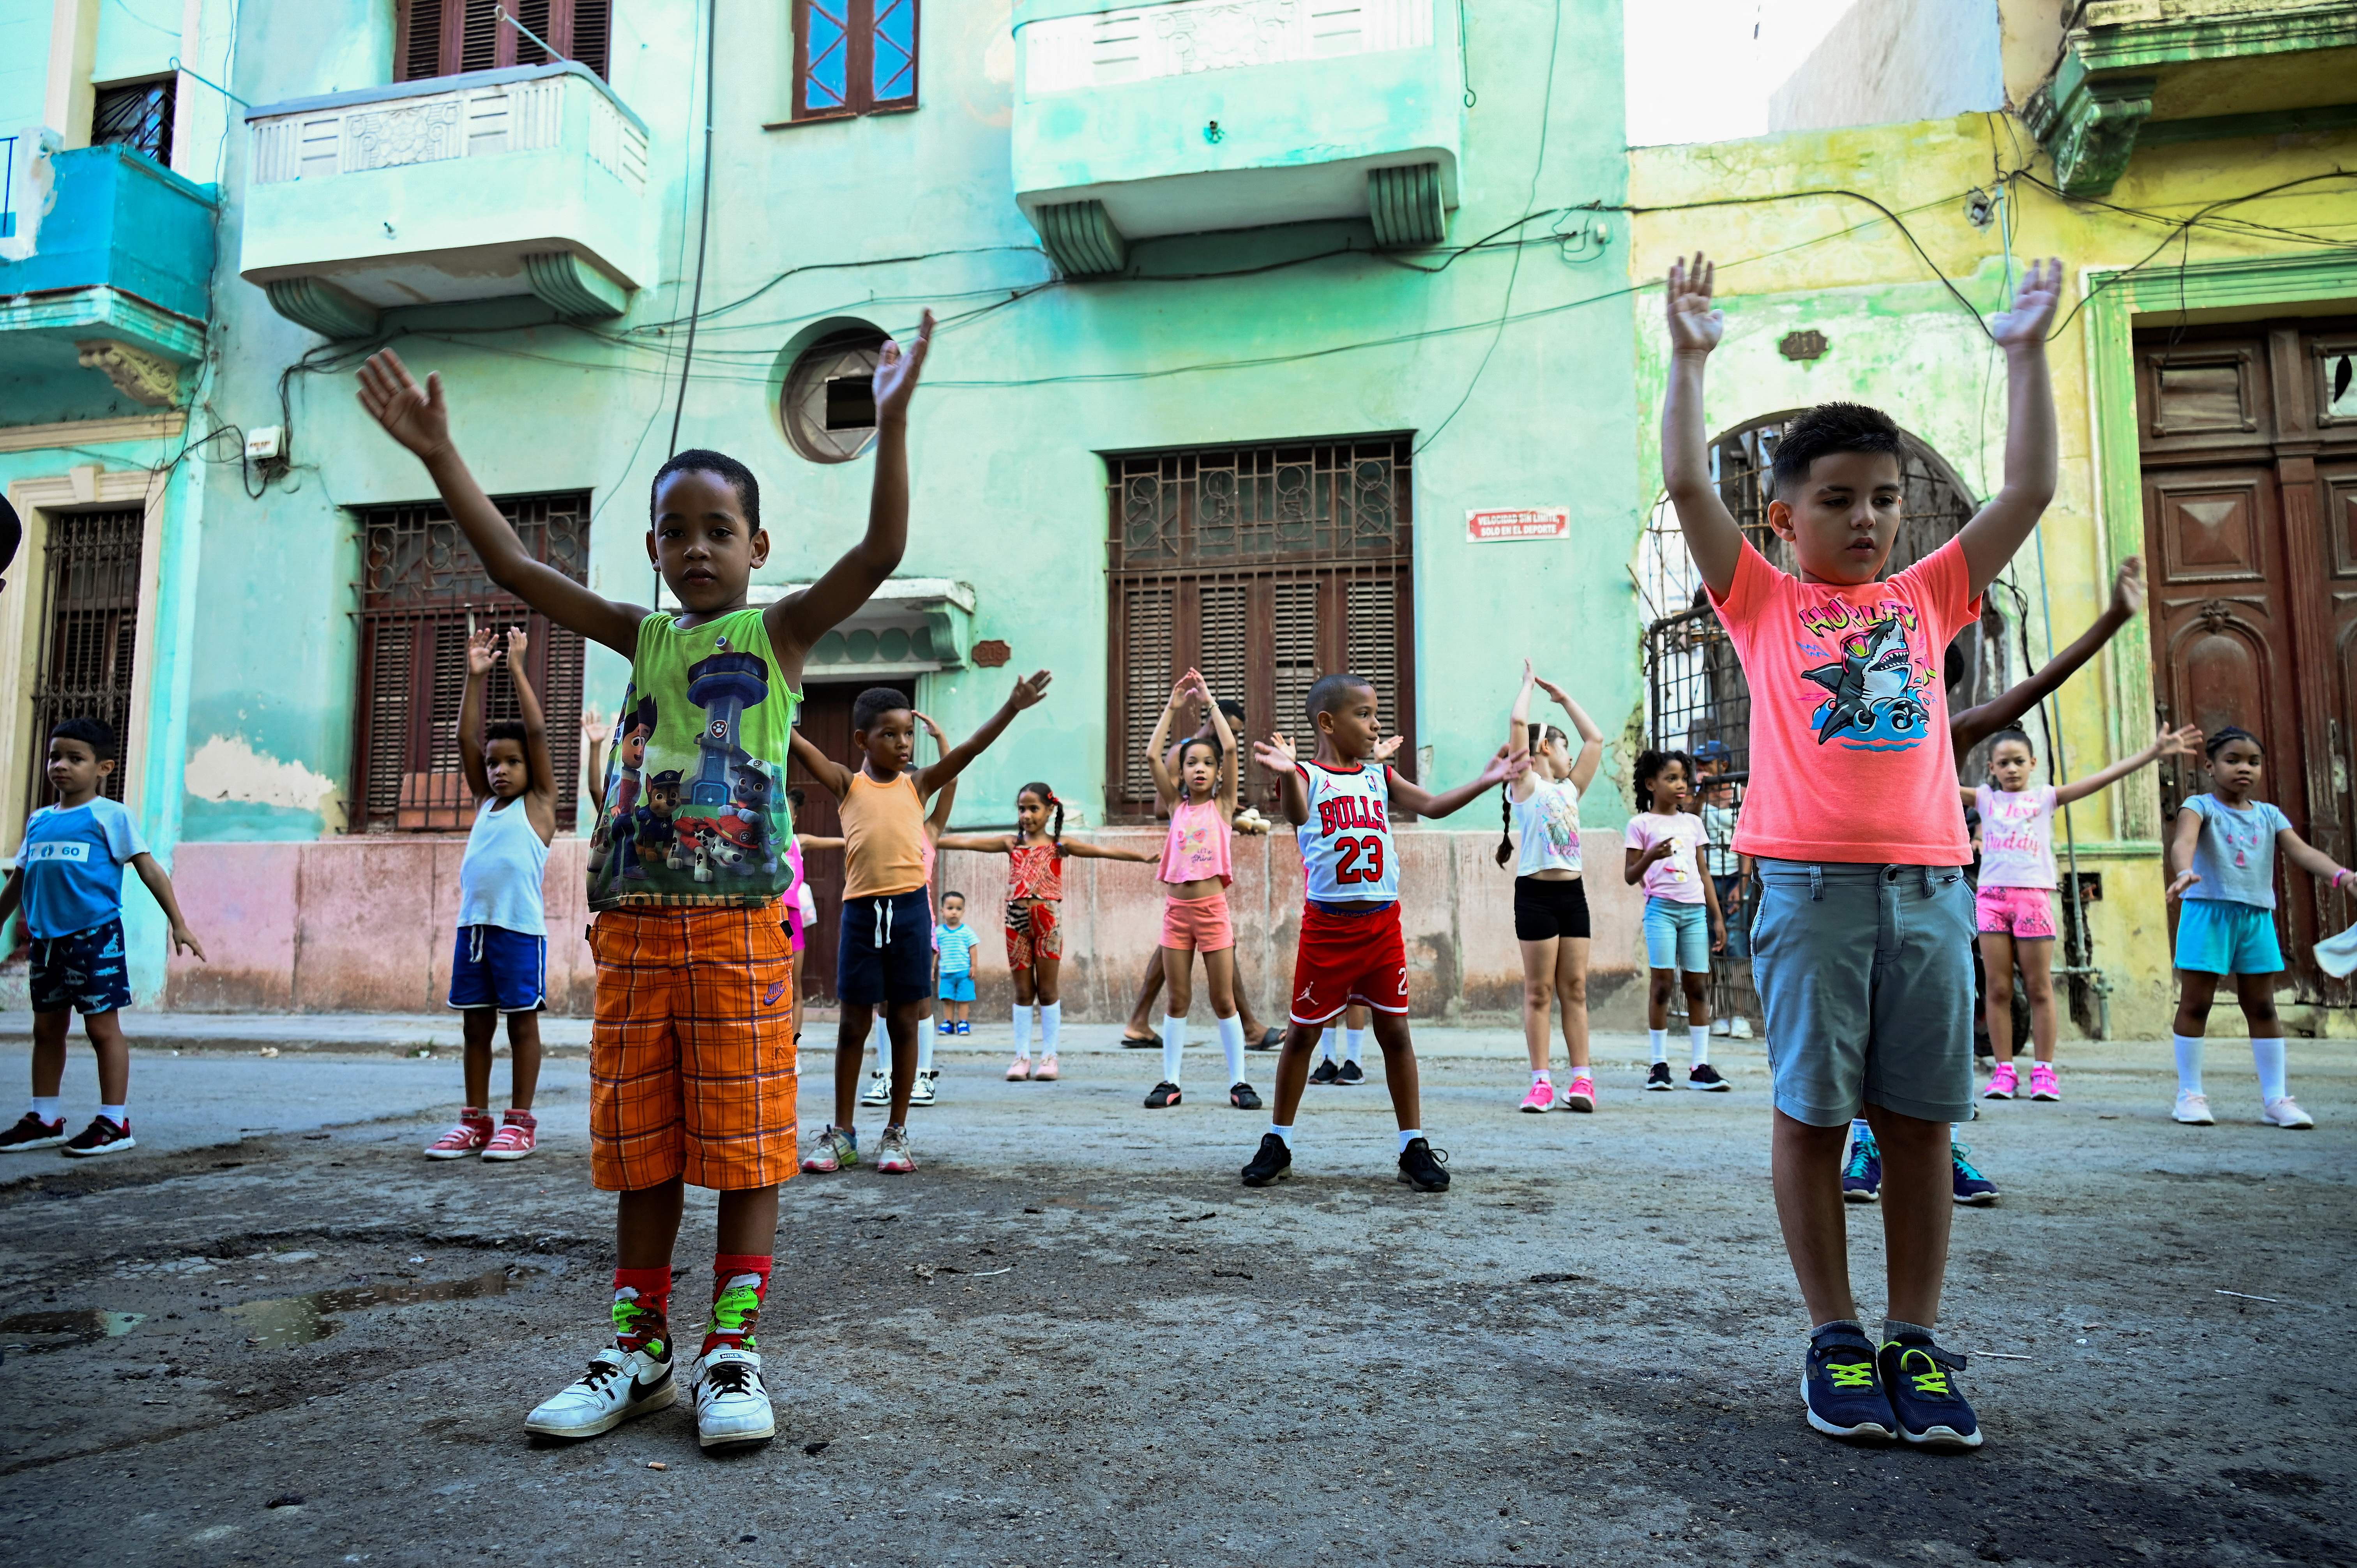 Are Those Painful Years Returning? – Translating Cuba